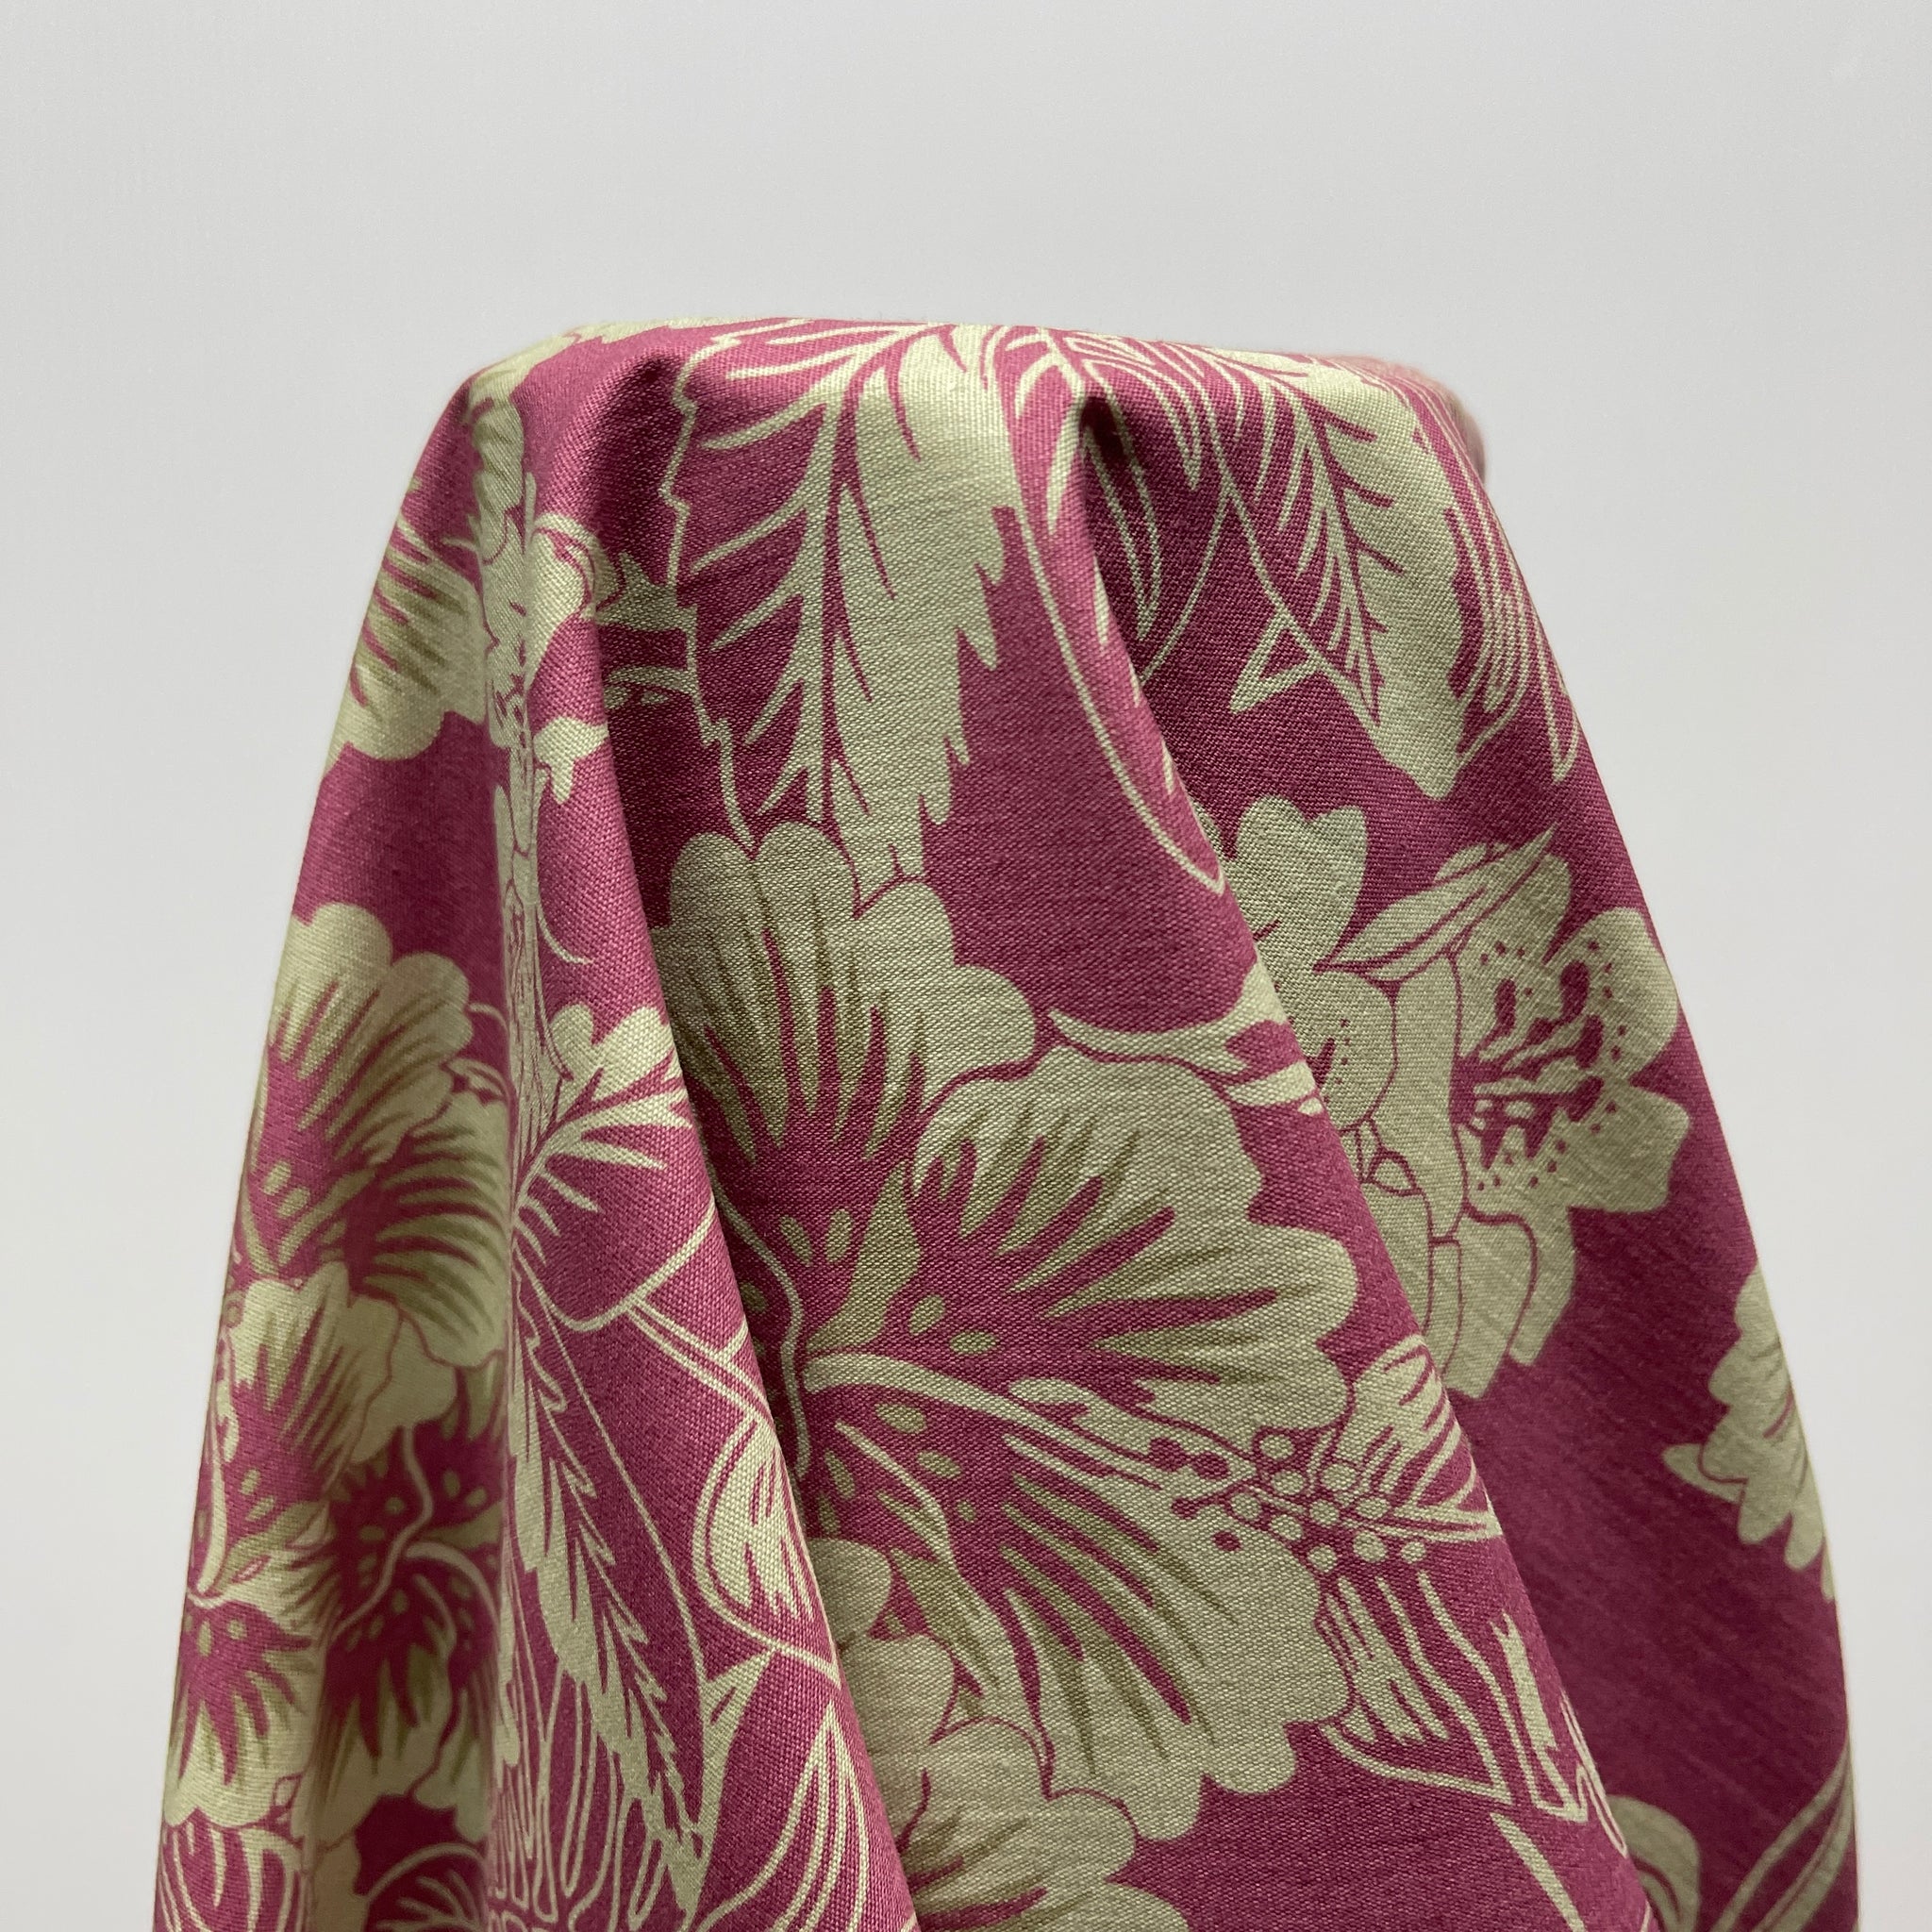 Large Vintage Floral 100% cotton printed fabric 150cm wide M1738